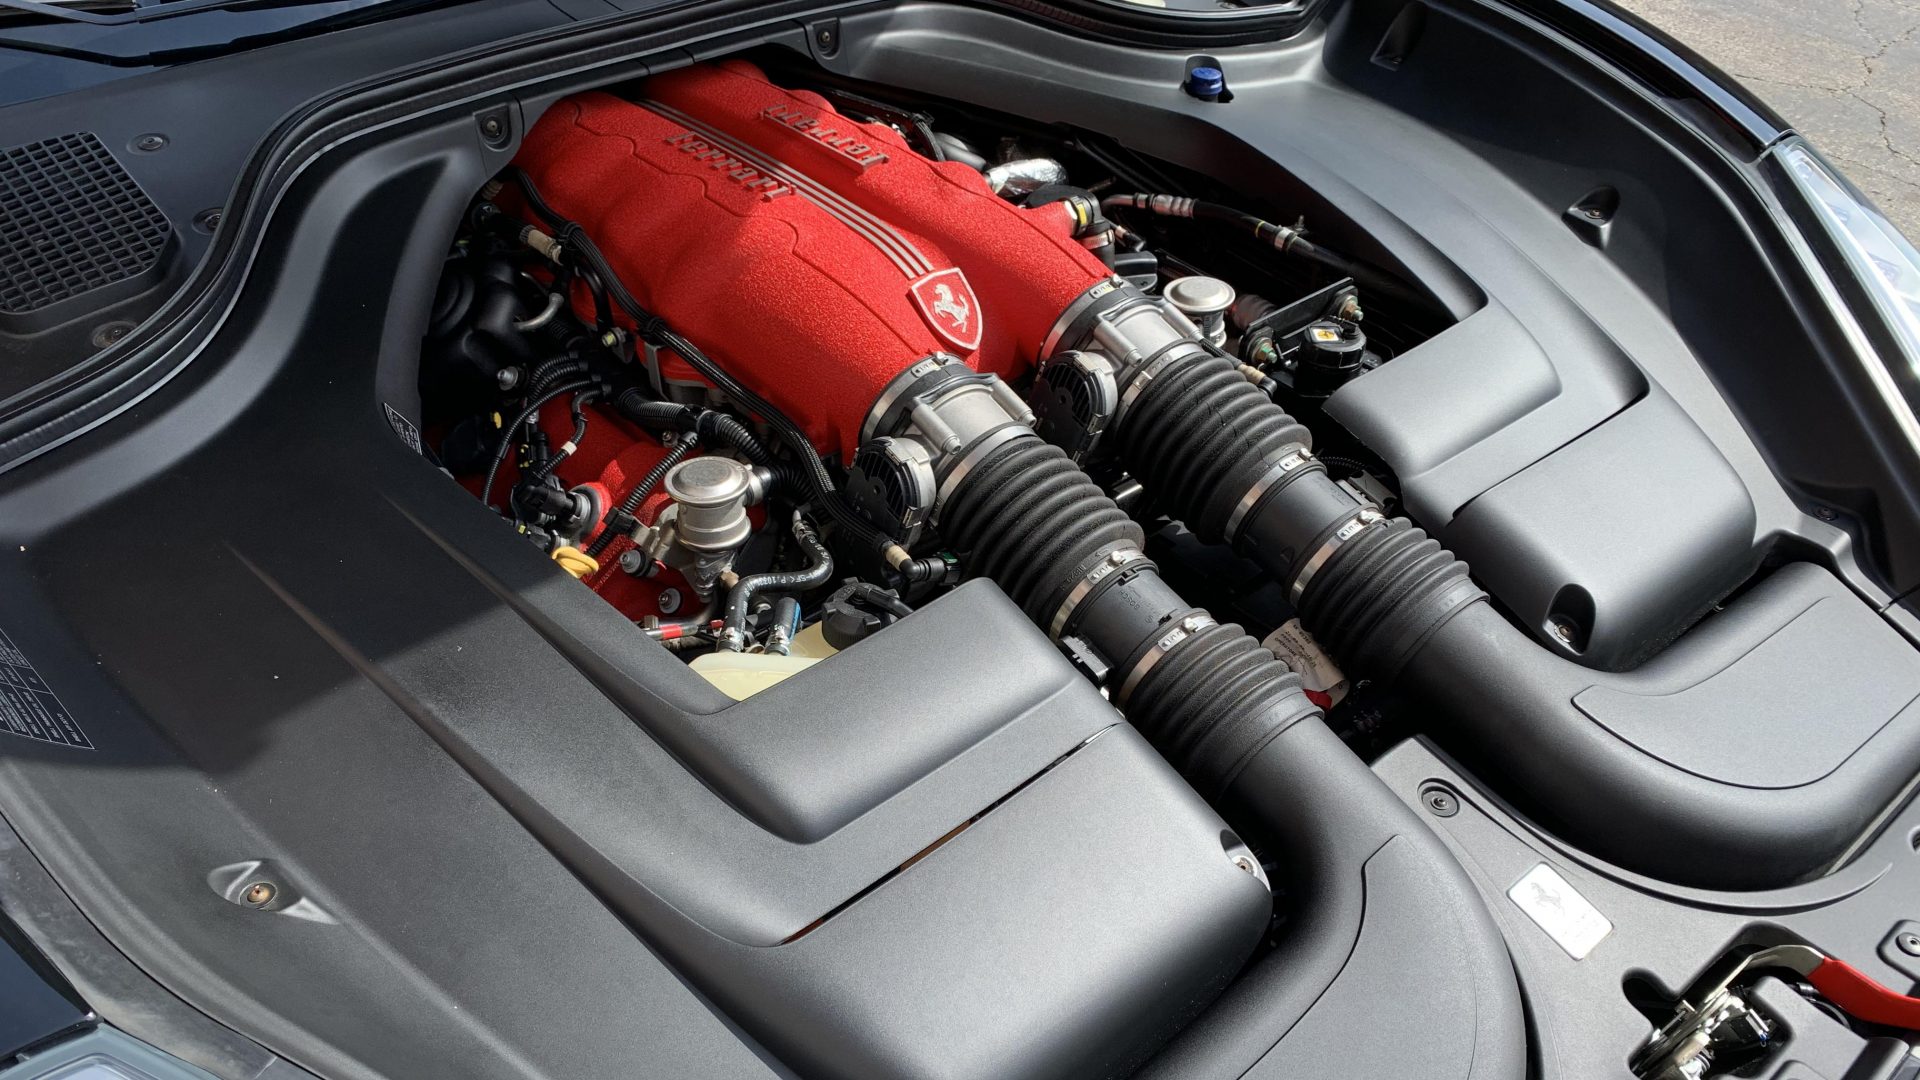 Ferrari California V8 engine, Lease with Premier